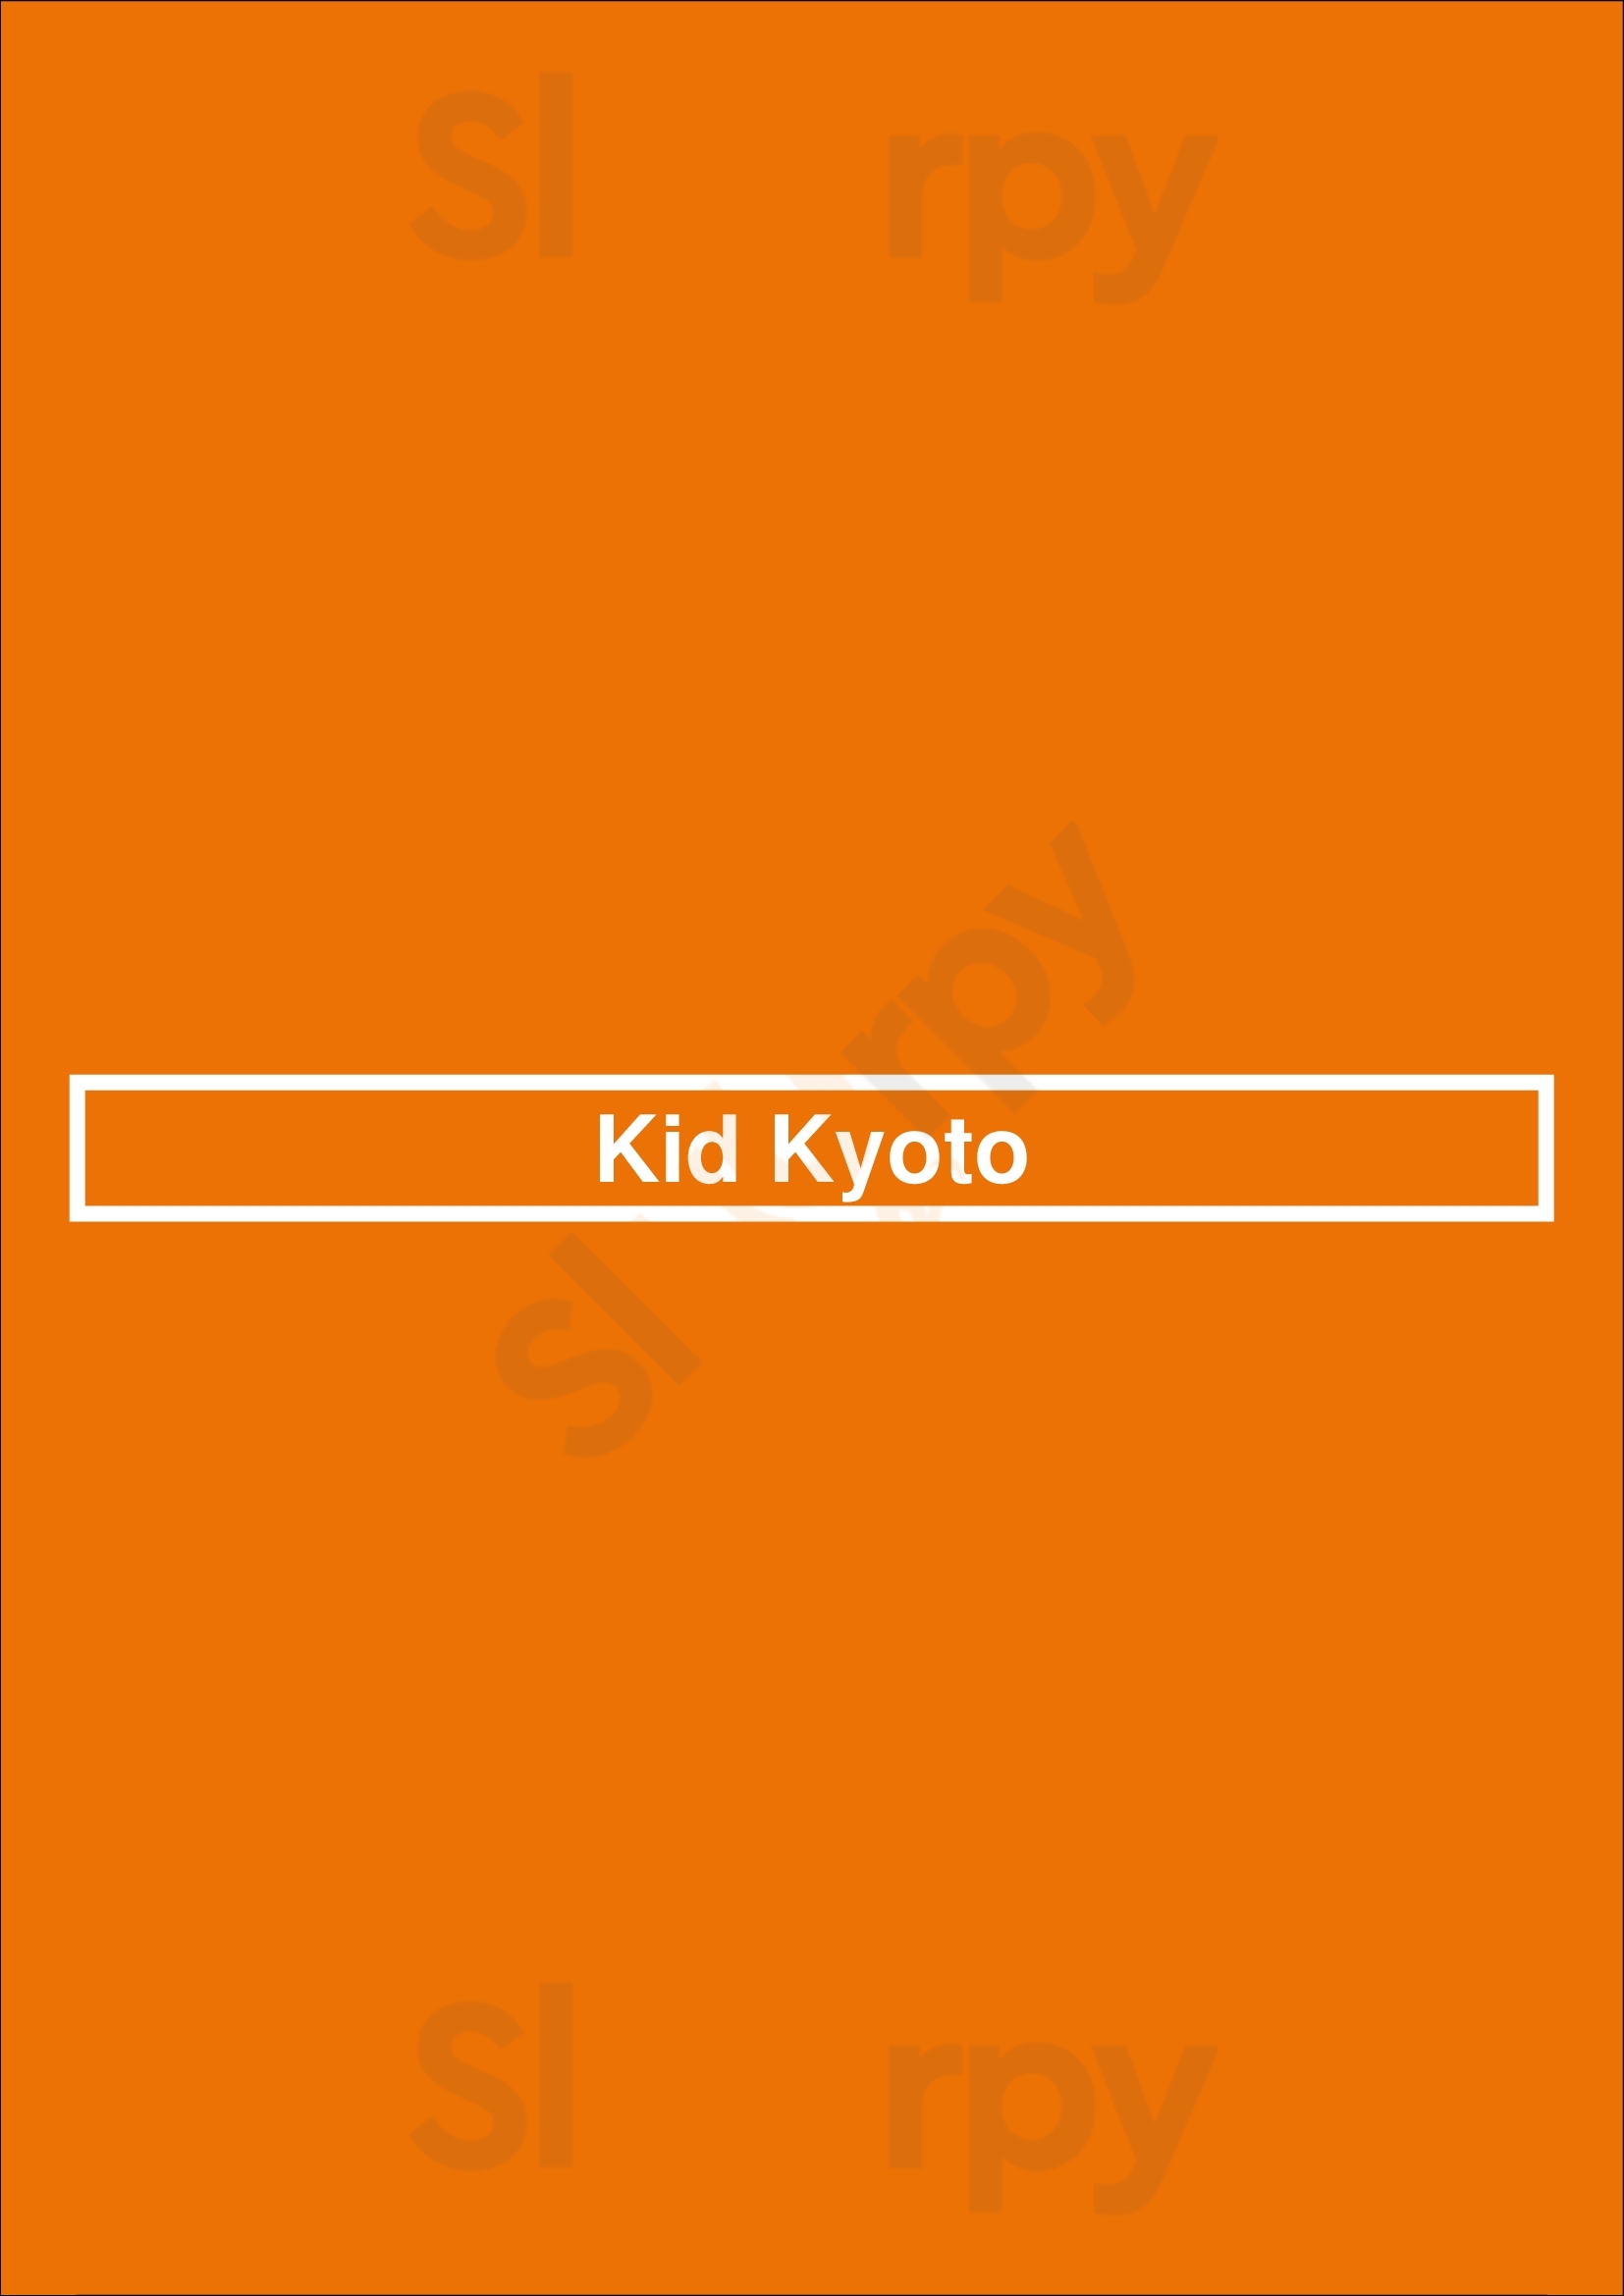 Kid Kyoto Sydney Menu - 1